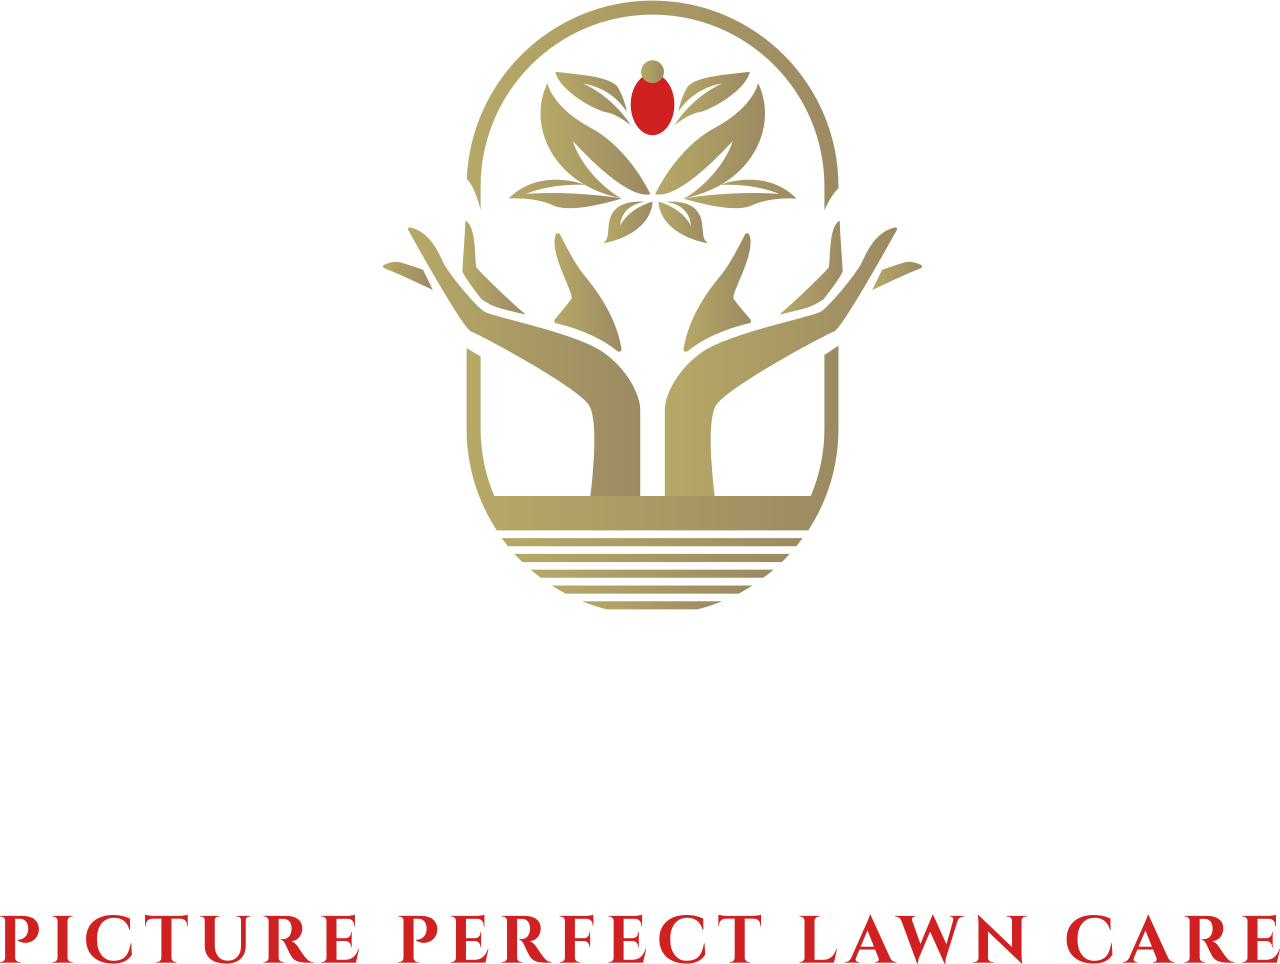 Picture perfect lawn care's logo